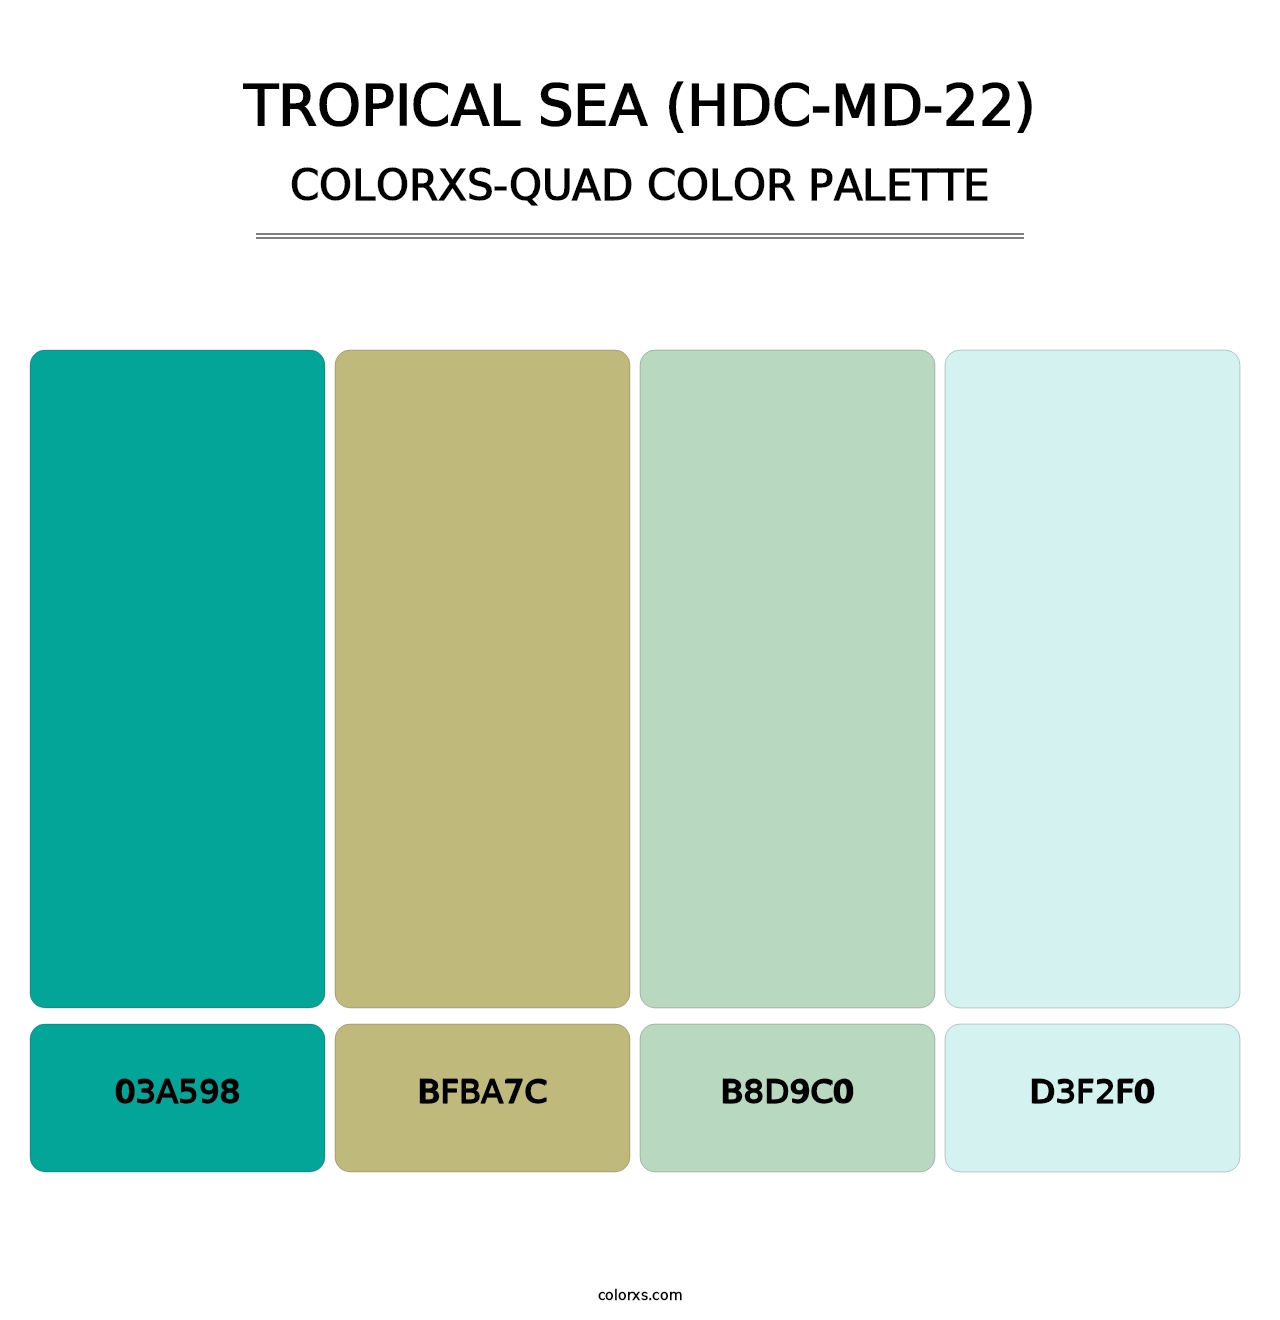 Tropical Sea (HDC-MD-22) - Colorxs Quad Palette